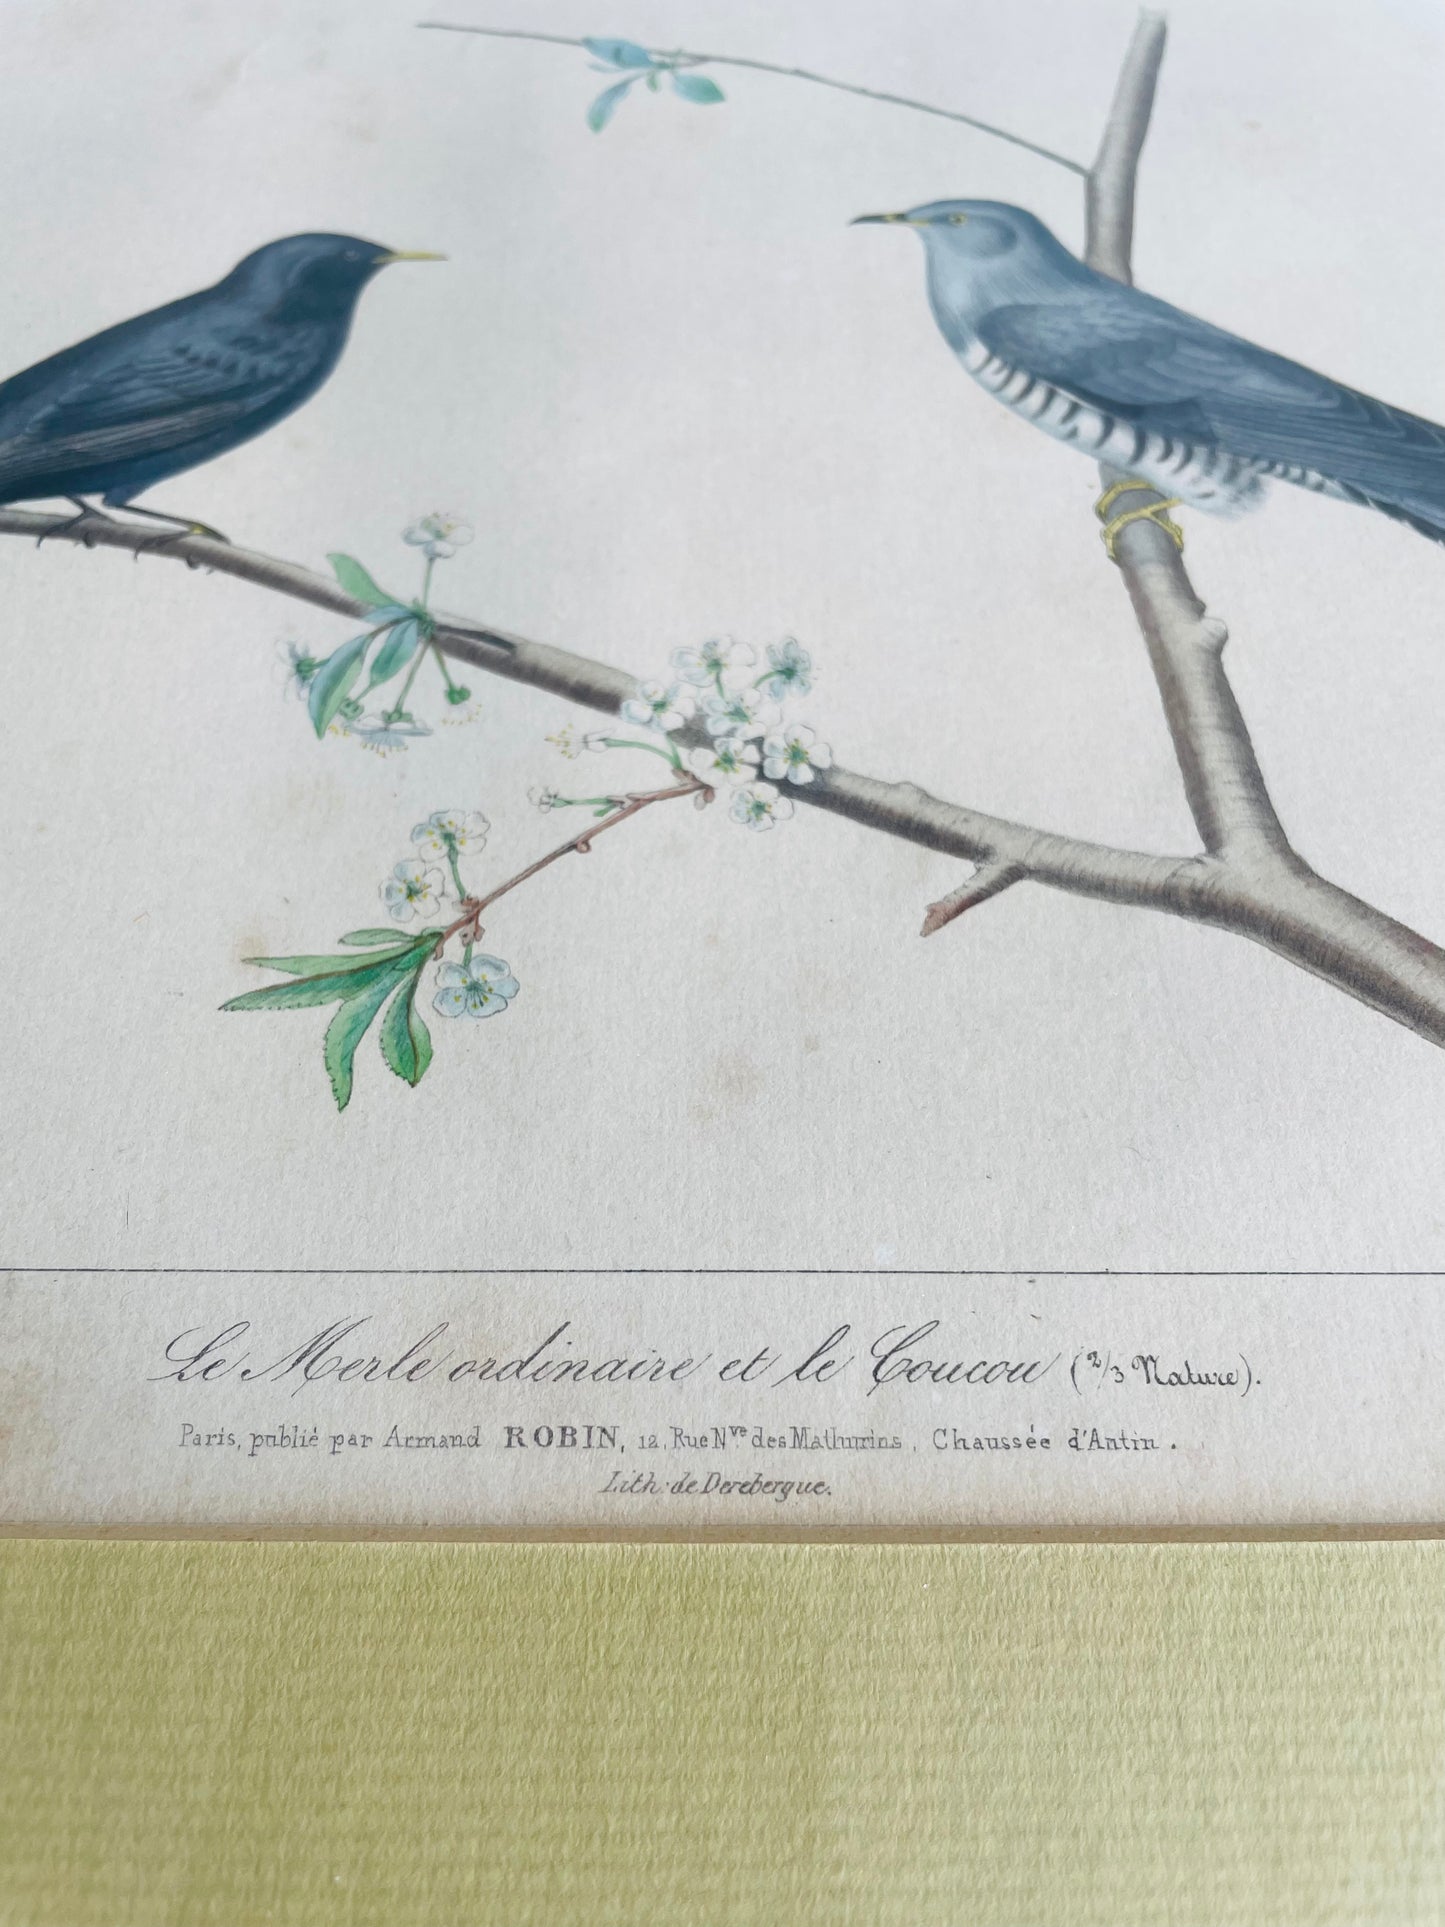 Edouard Travies Galerie Ornithologique Collection of European Birds Framed Lithograph Print - The Common Blackbird & The Cuckoo